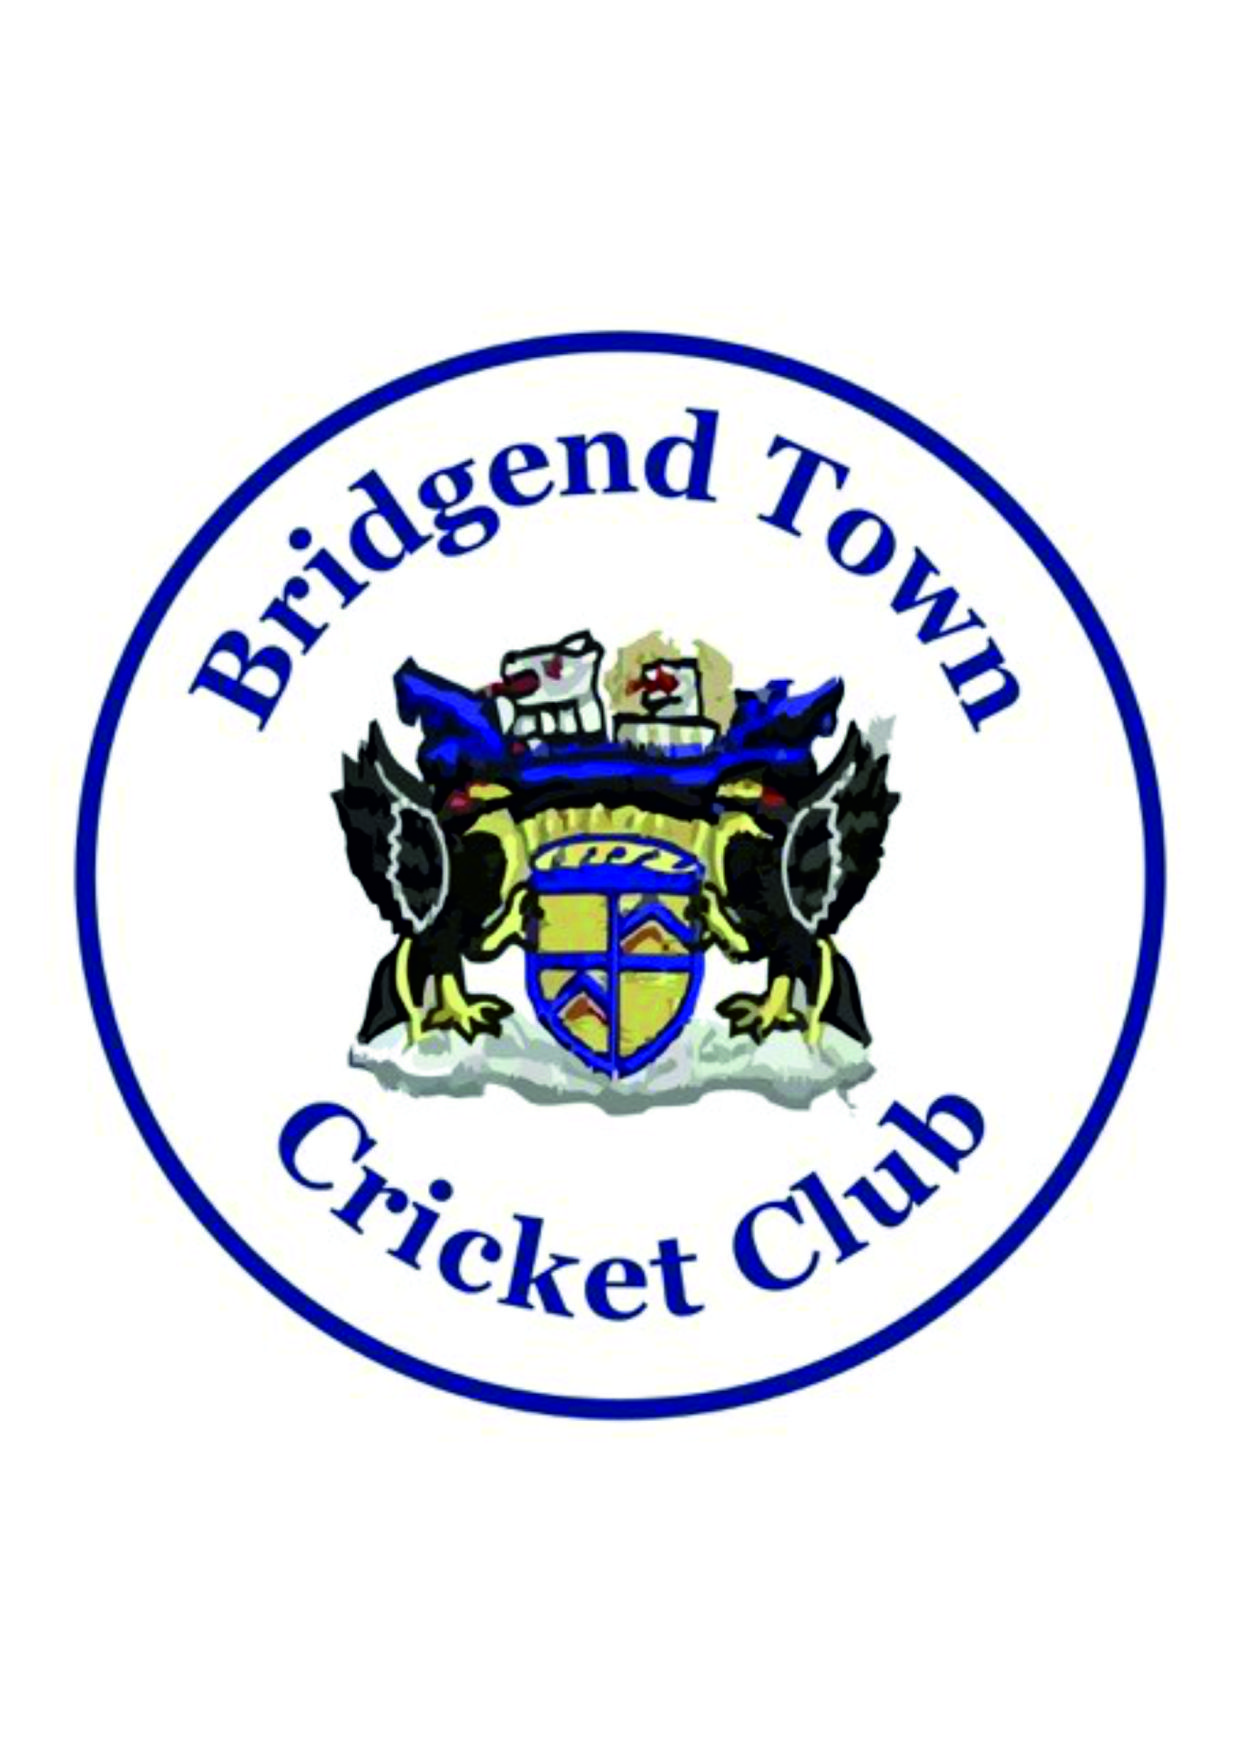 Bridgend Town CC